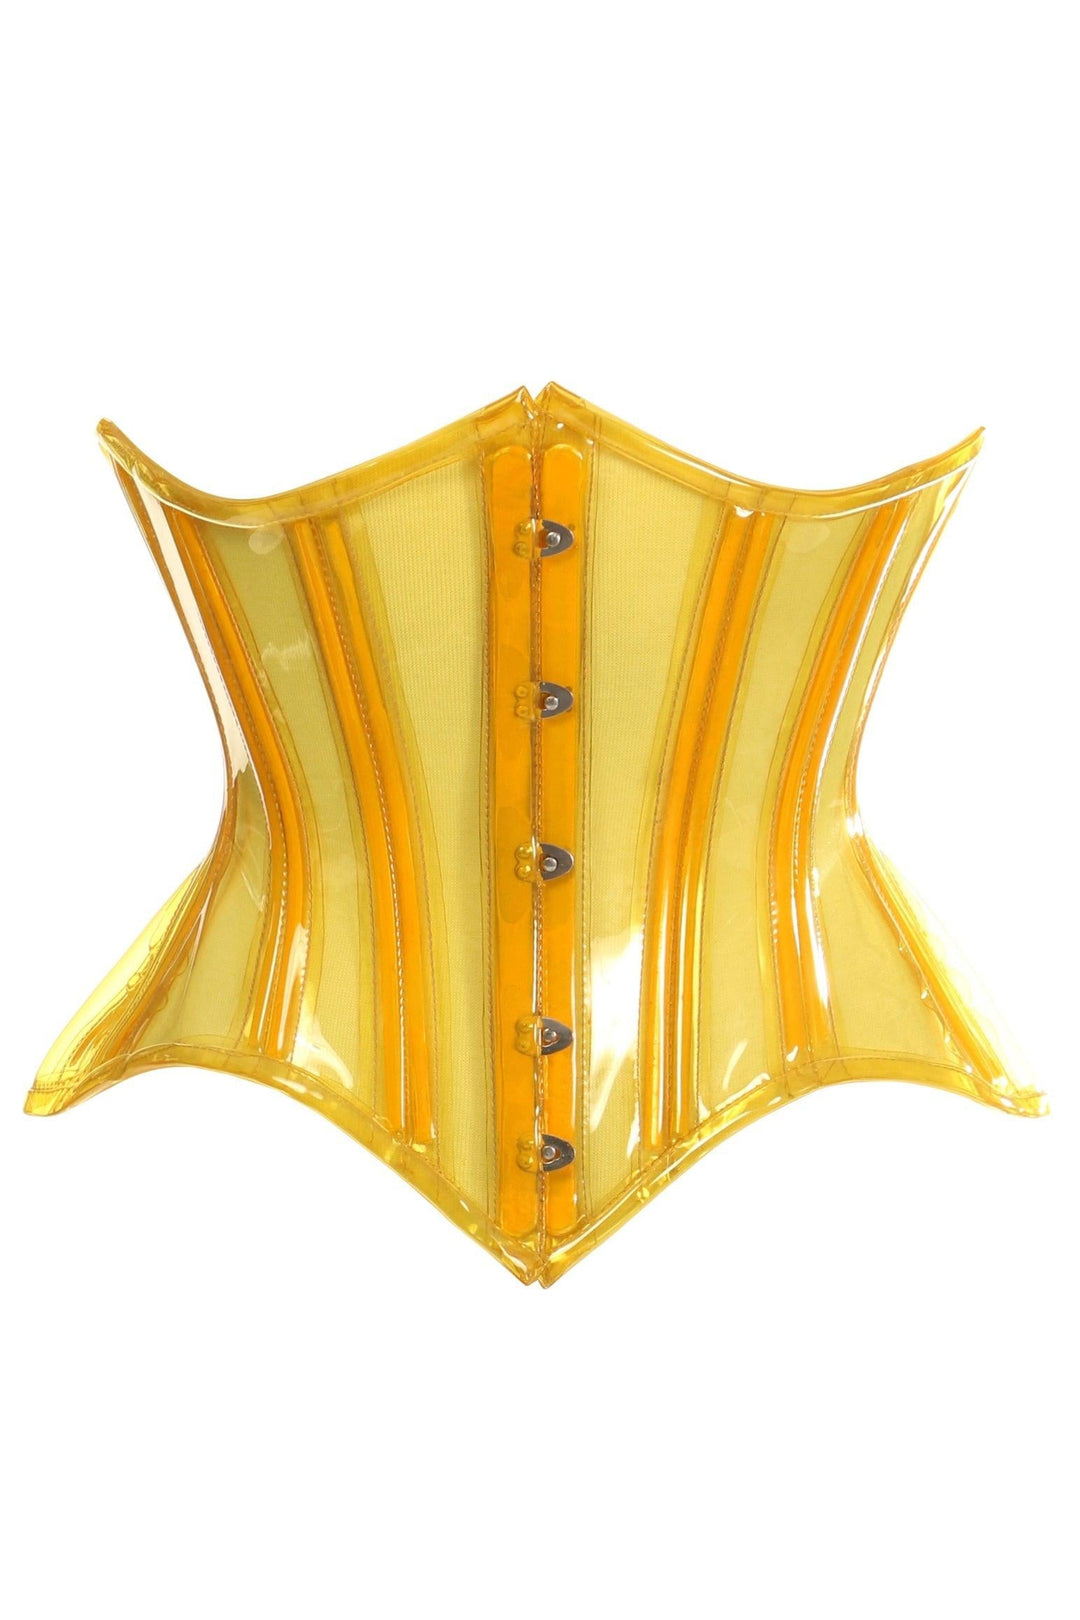 Lavish Yellow Clear Curvy Underbust Waist Cincher Corset-Waist Cincher-Daisy Corsets-Yellow-2X-SEXYSHOES.COM